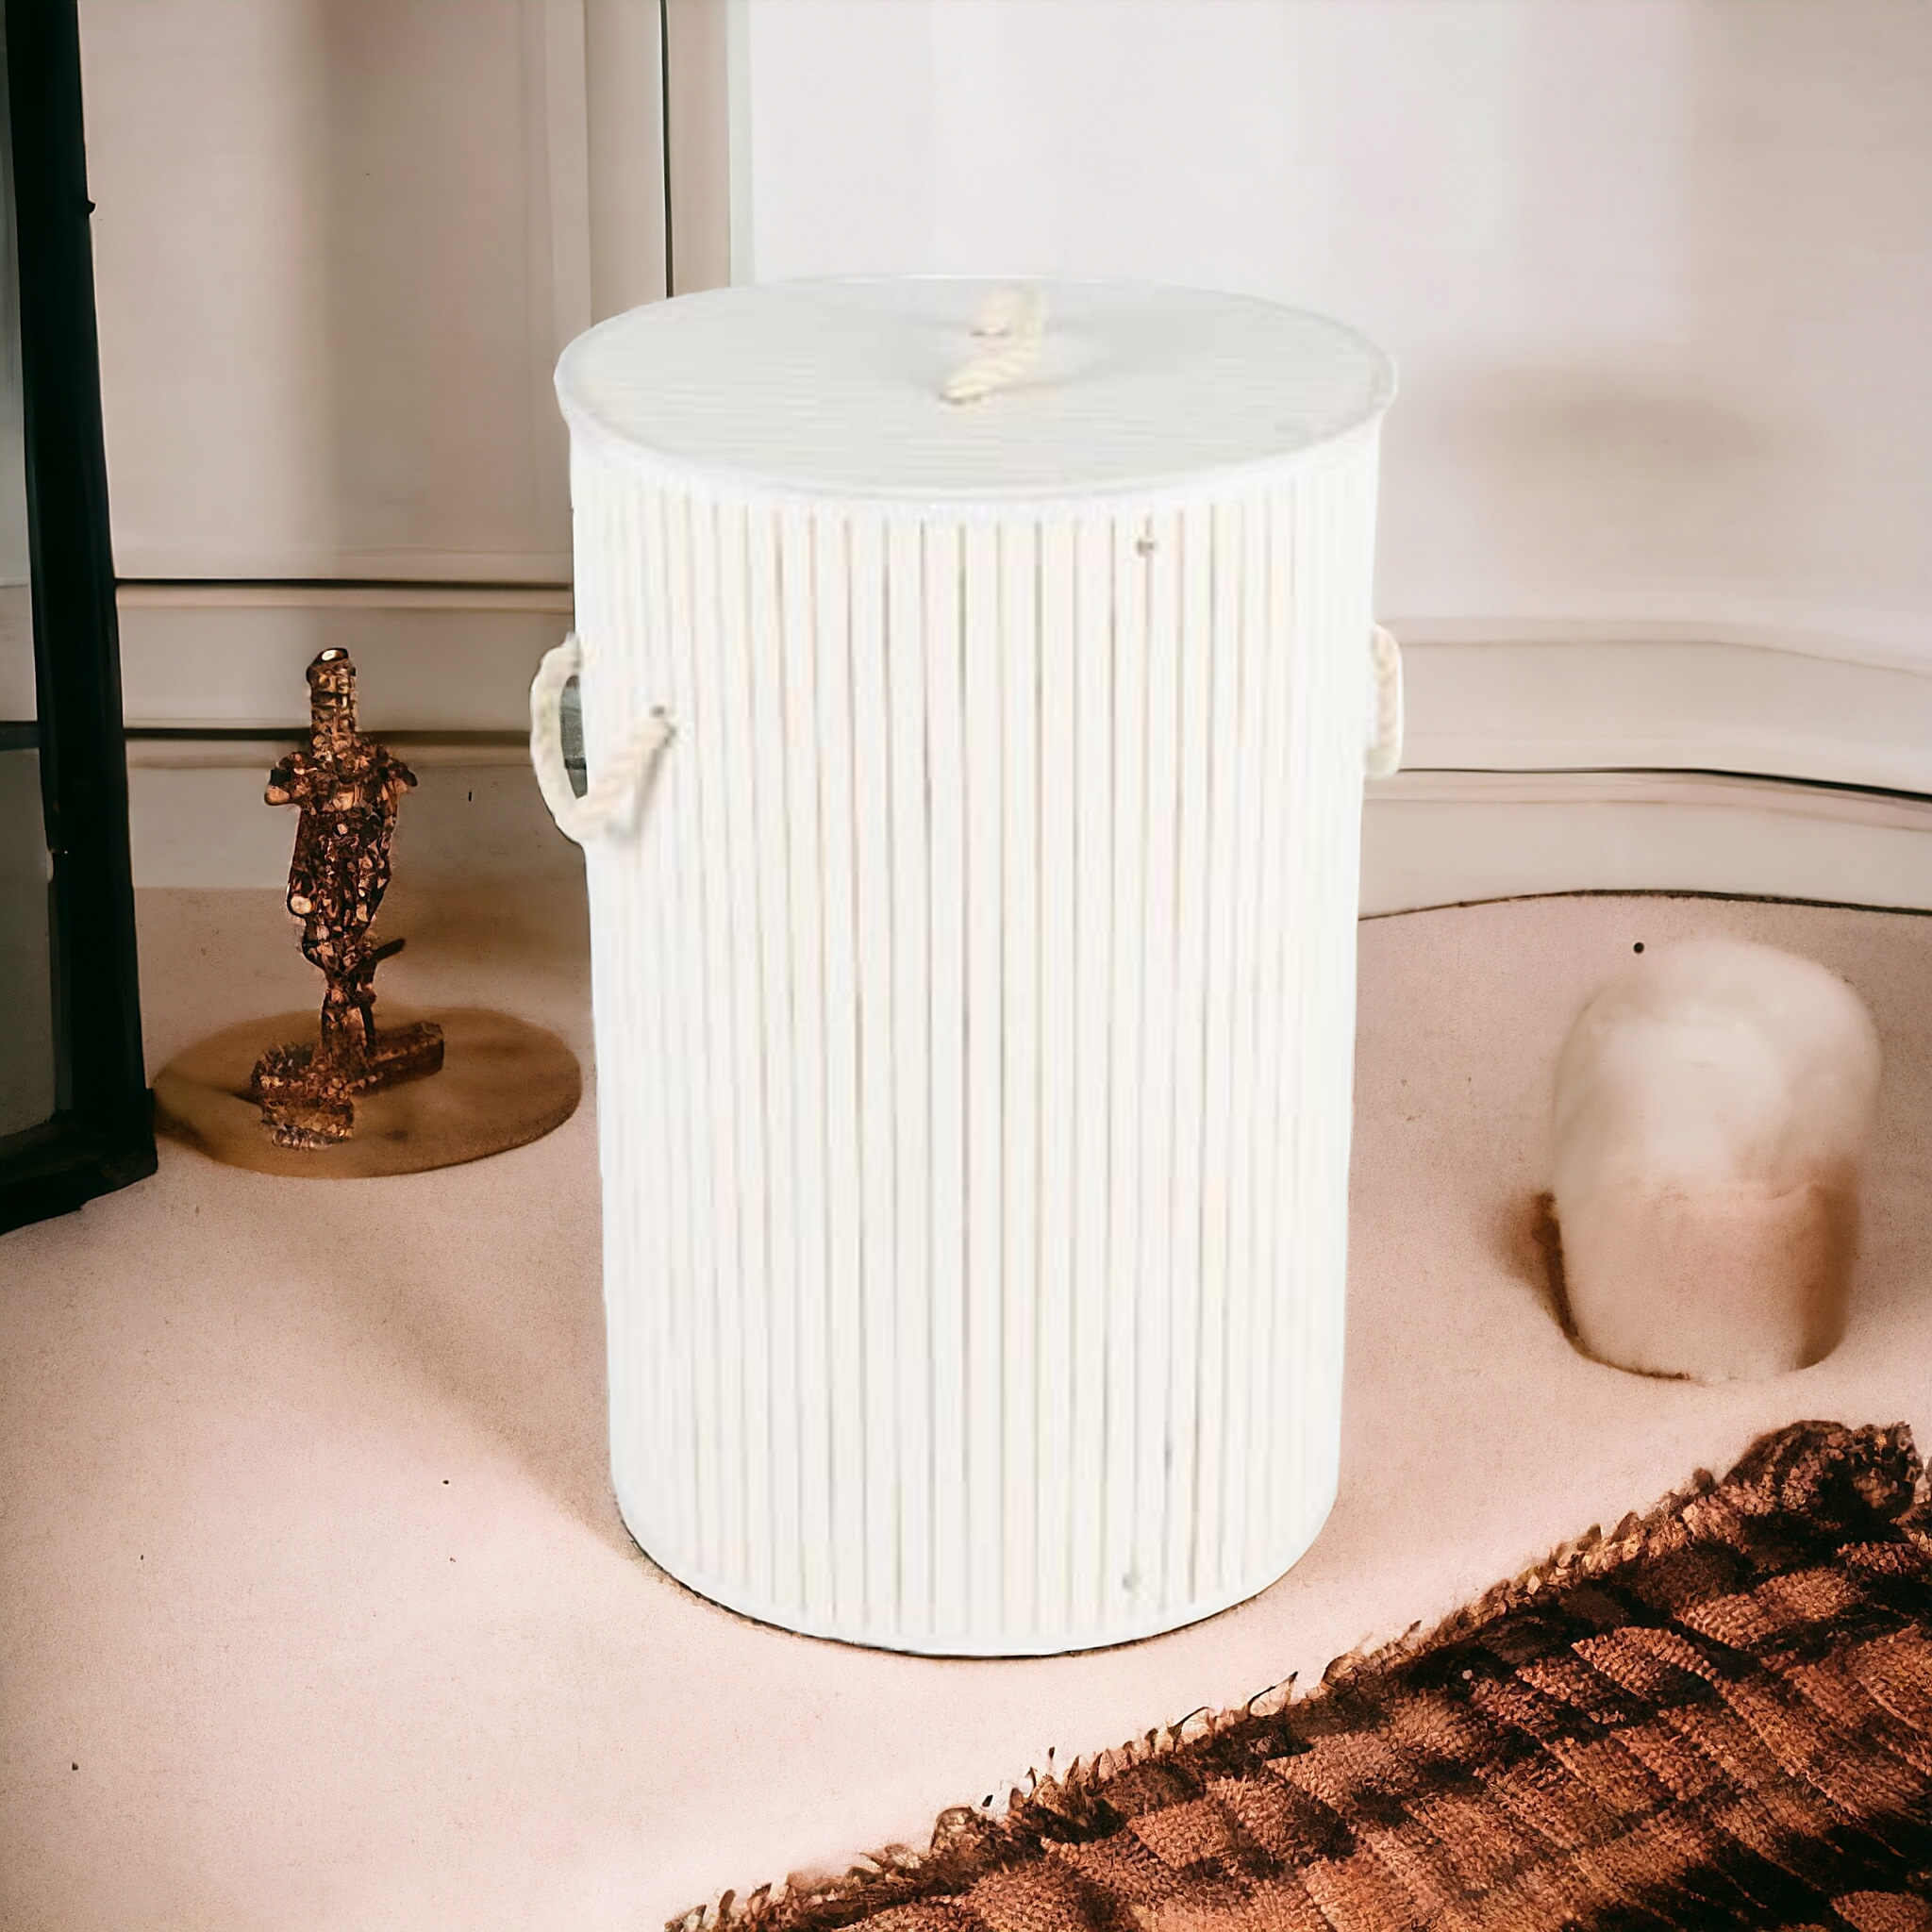 Aqua Bamboo Foldable Laundry Linen Bin Basket Round White 15694